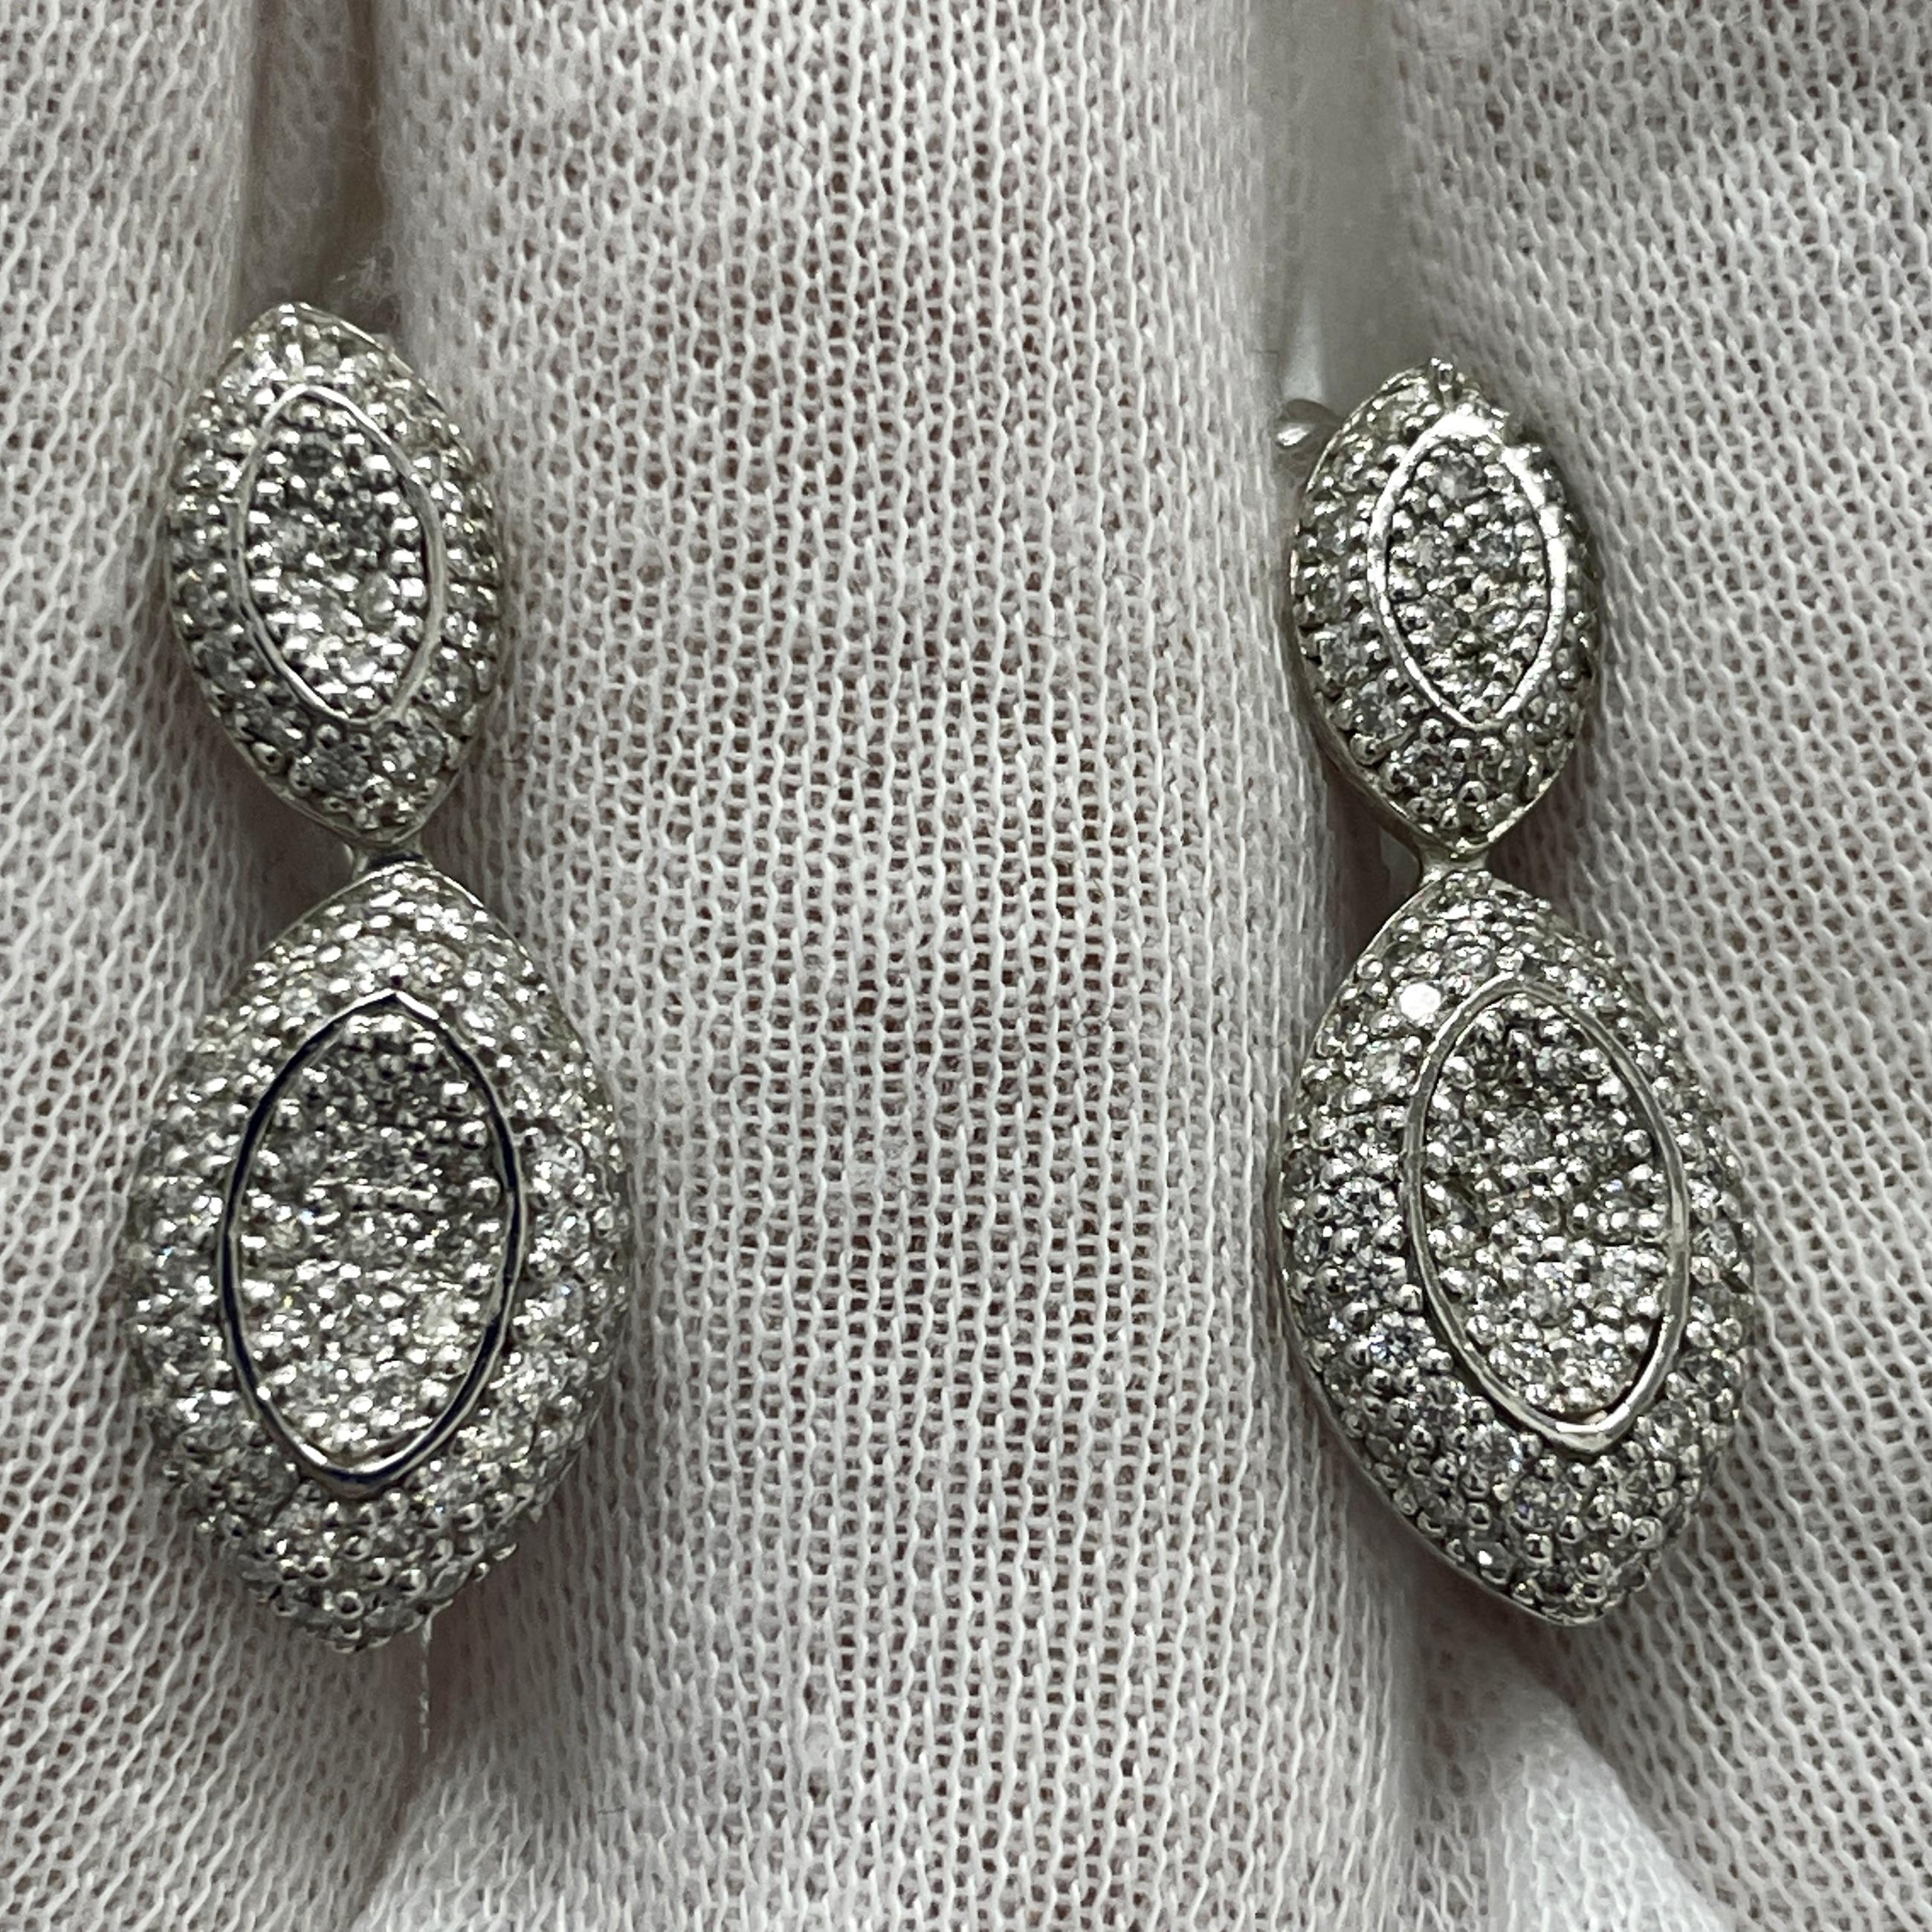 These elegant 14K white gold dangling earrings carry 1.27Ct of brilliant white diamonds